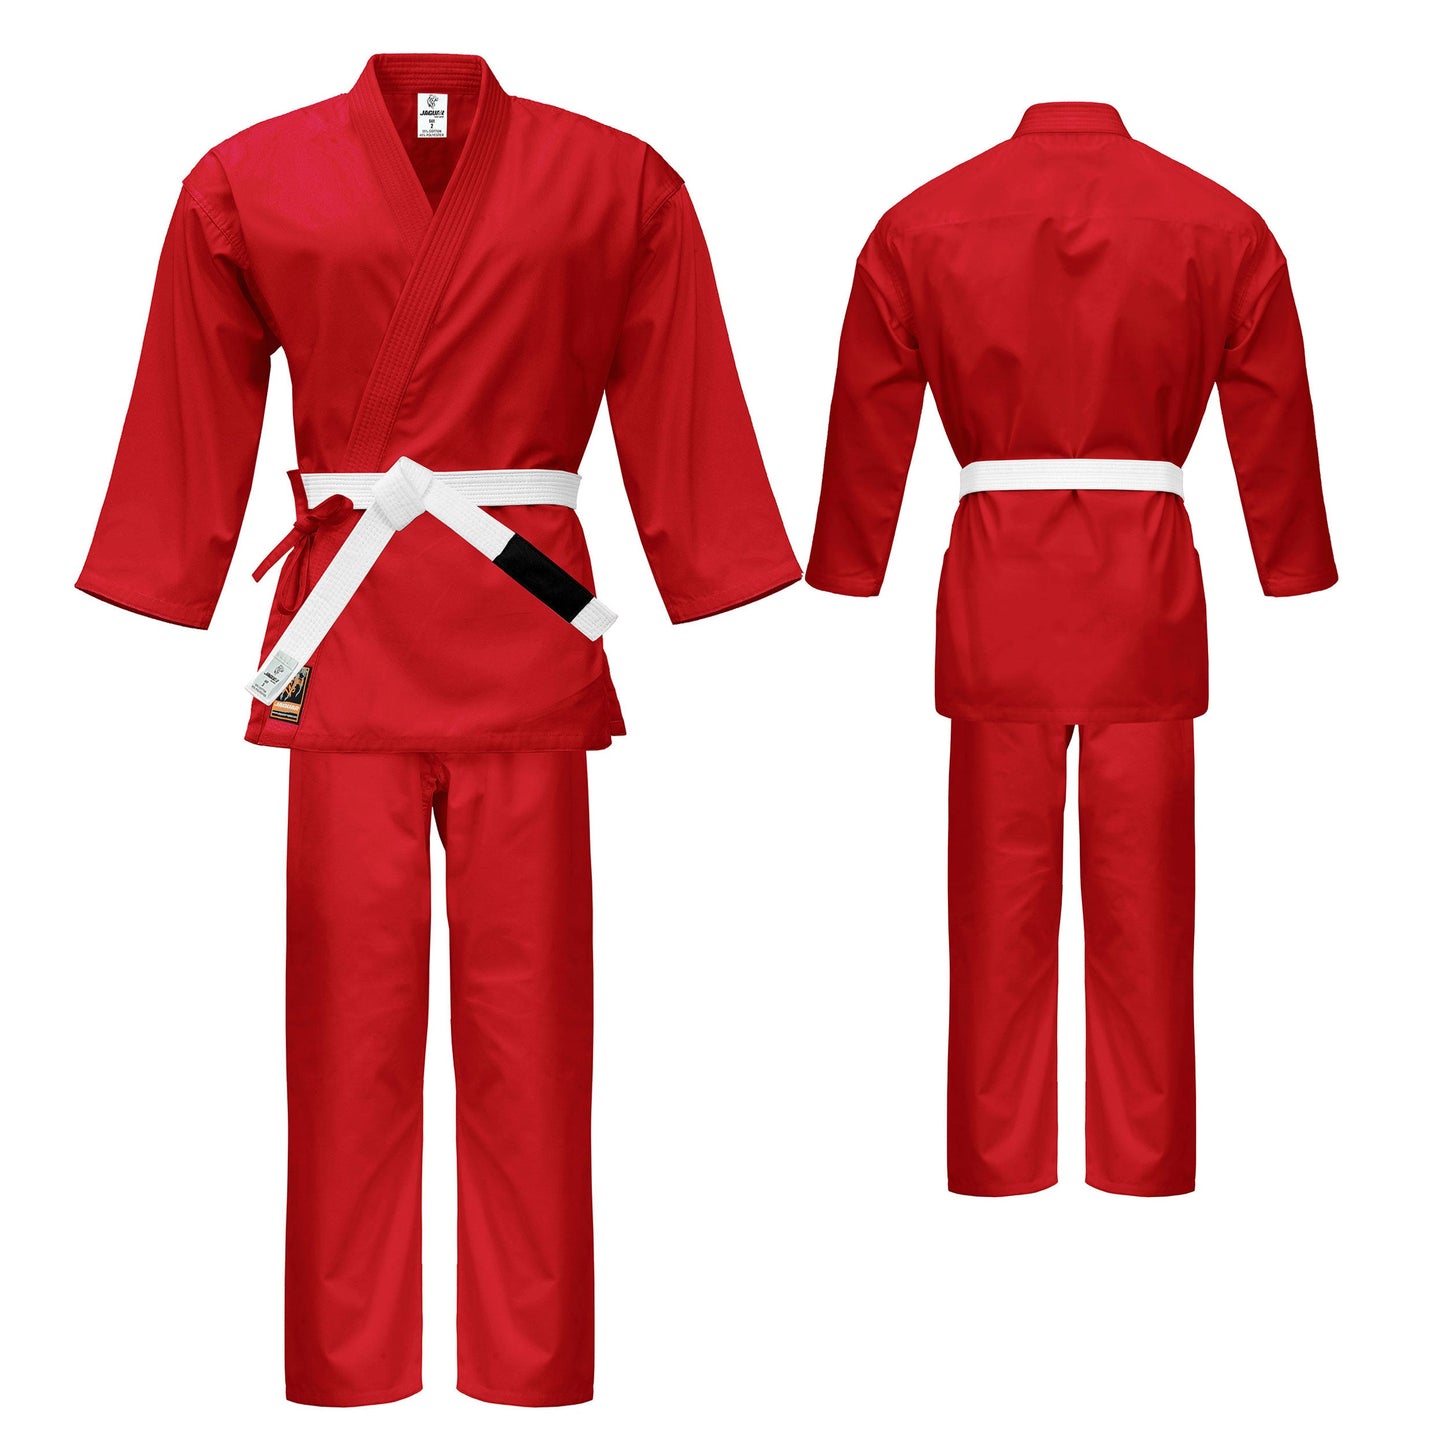 Jaguar Colored Karate Uniform WKF Compliant - Light Weight Kids Adults Karate Gi - (Belt Included)